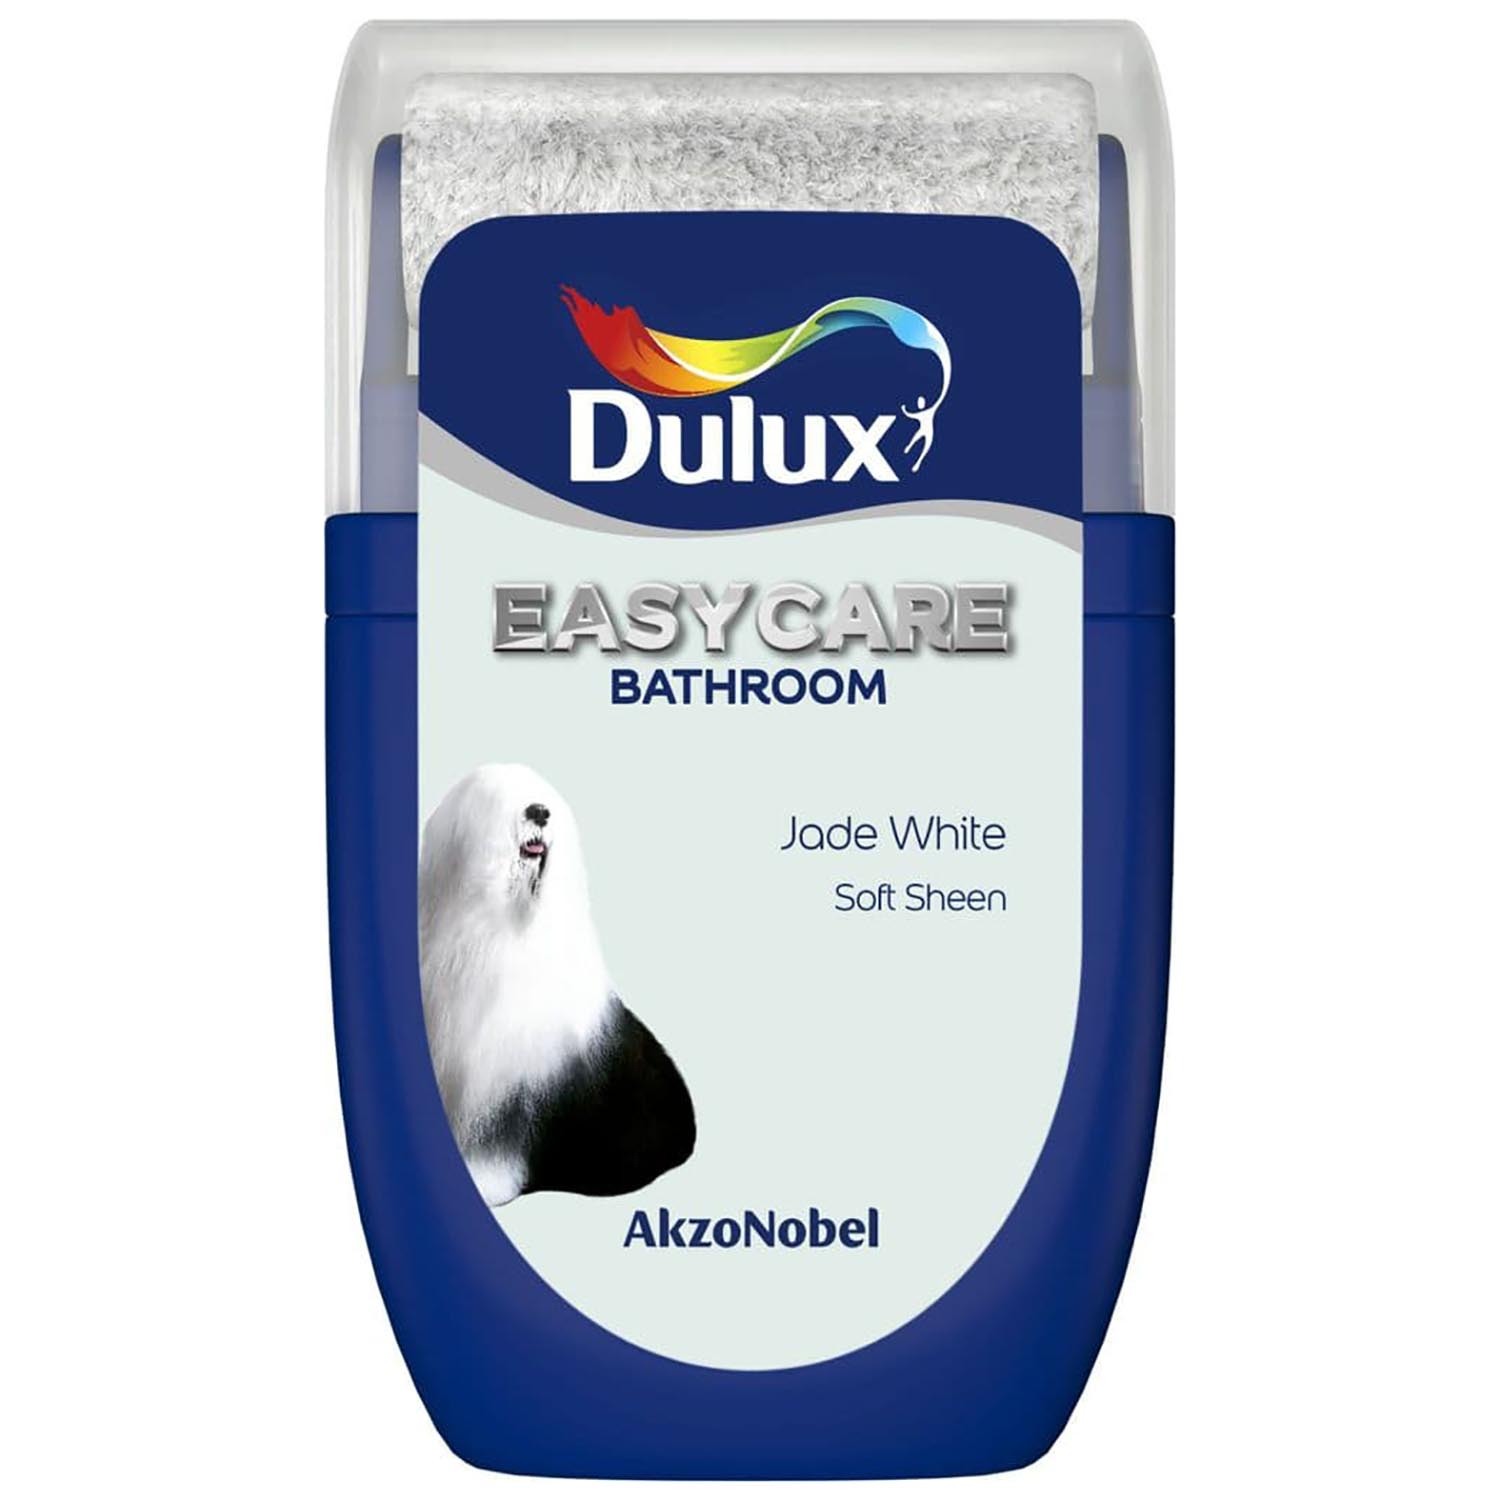 Dulux Easycare Jade White Soft Sheen Bath Tester 75ml Image 1